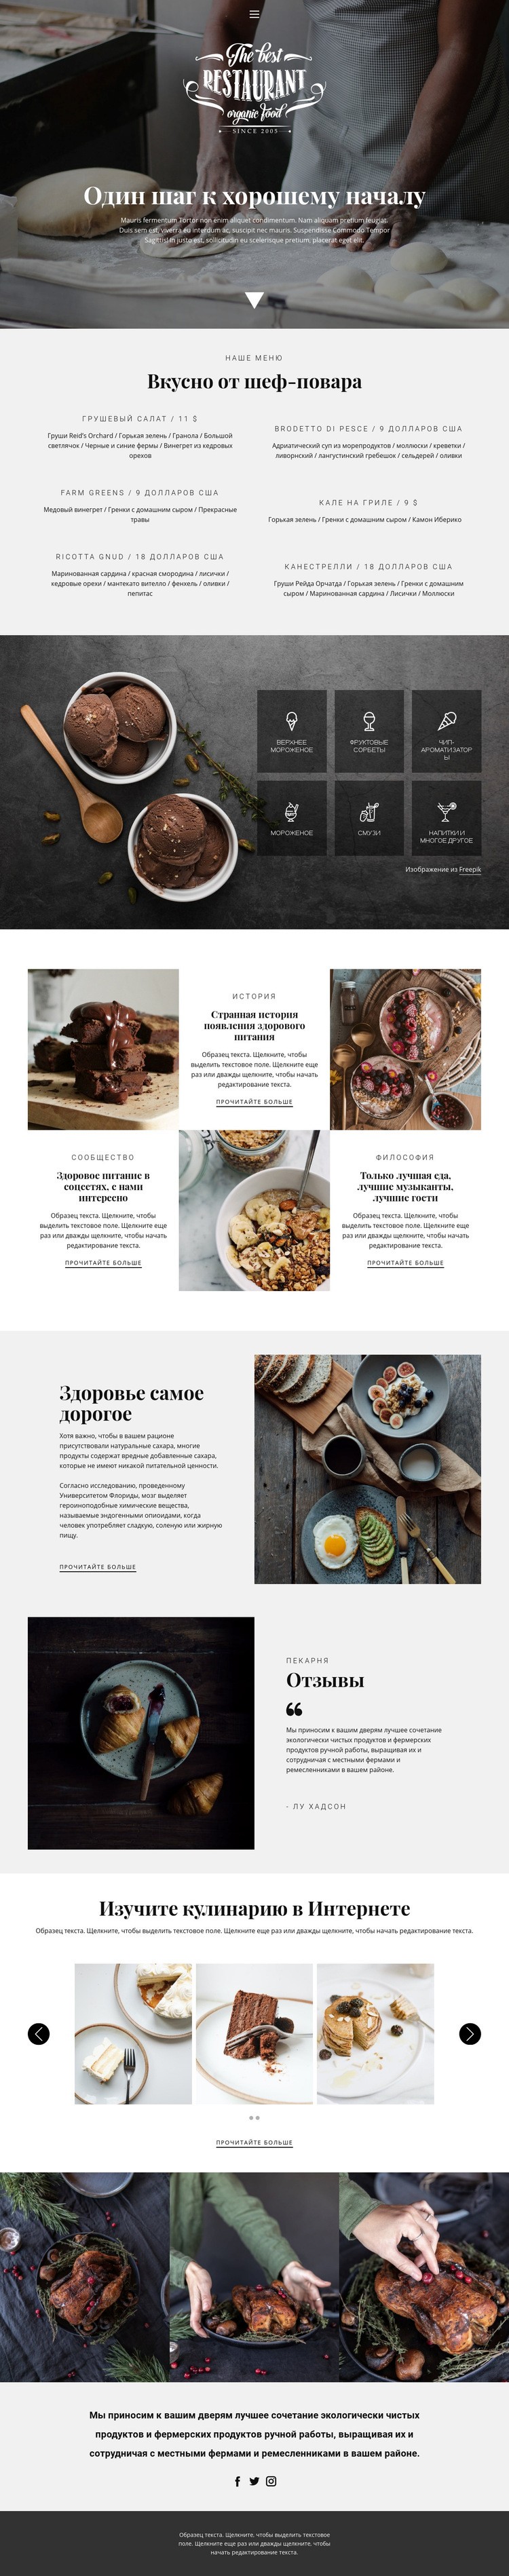 Рецепты и уроки кулинарии Мокап веб-сайта